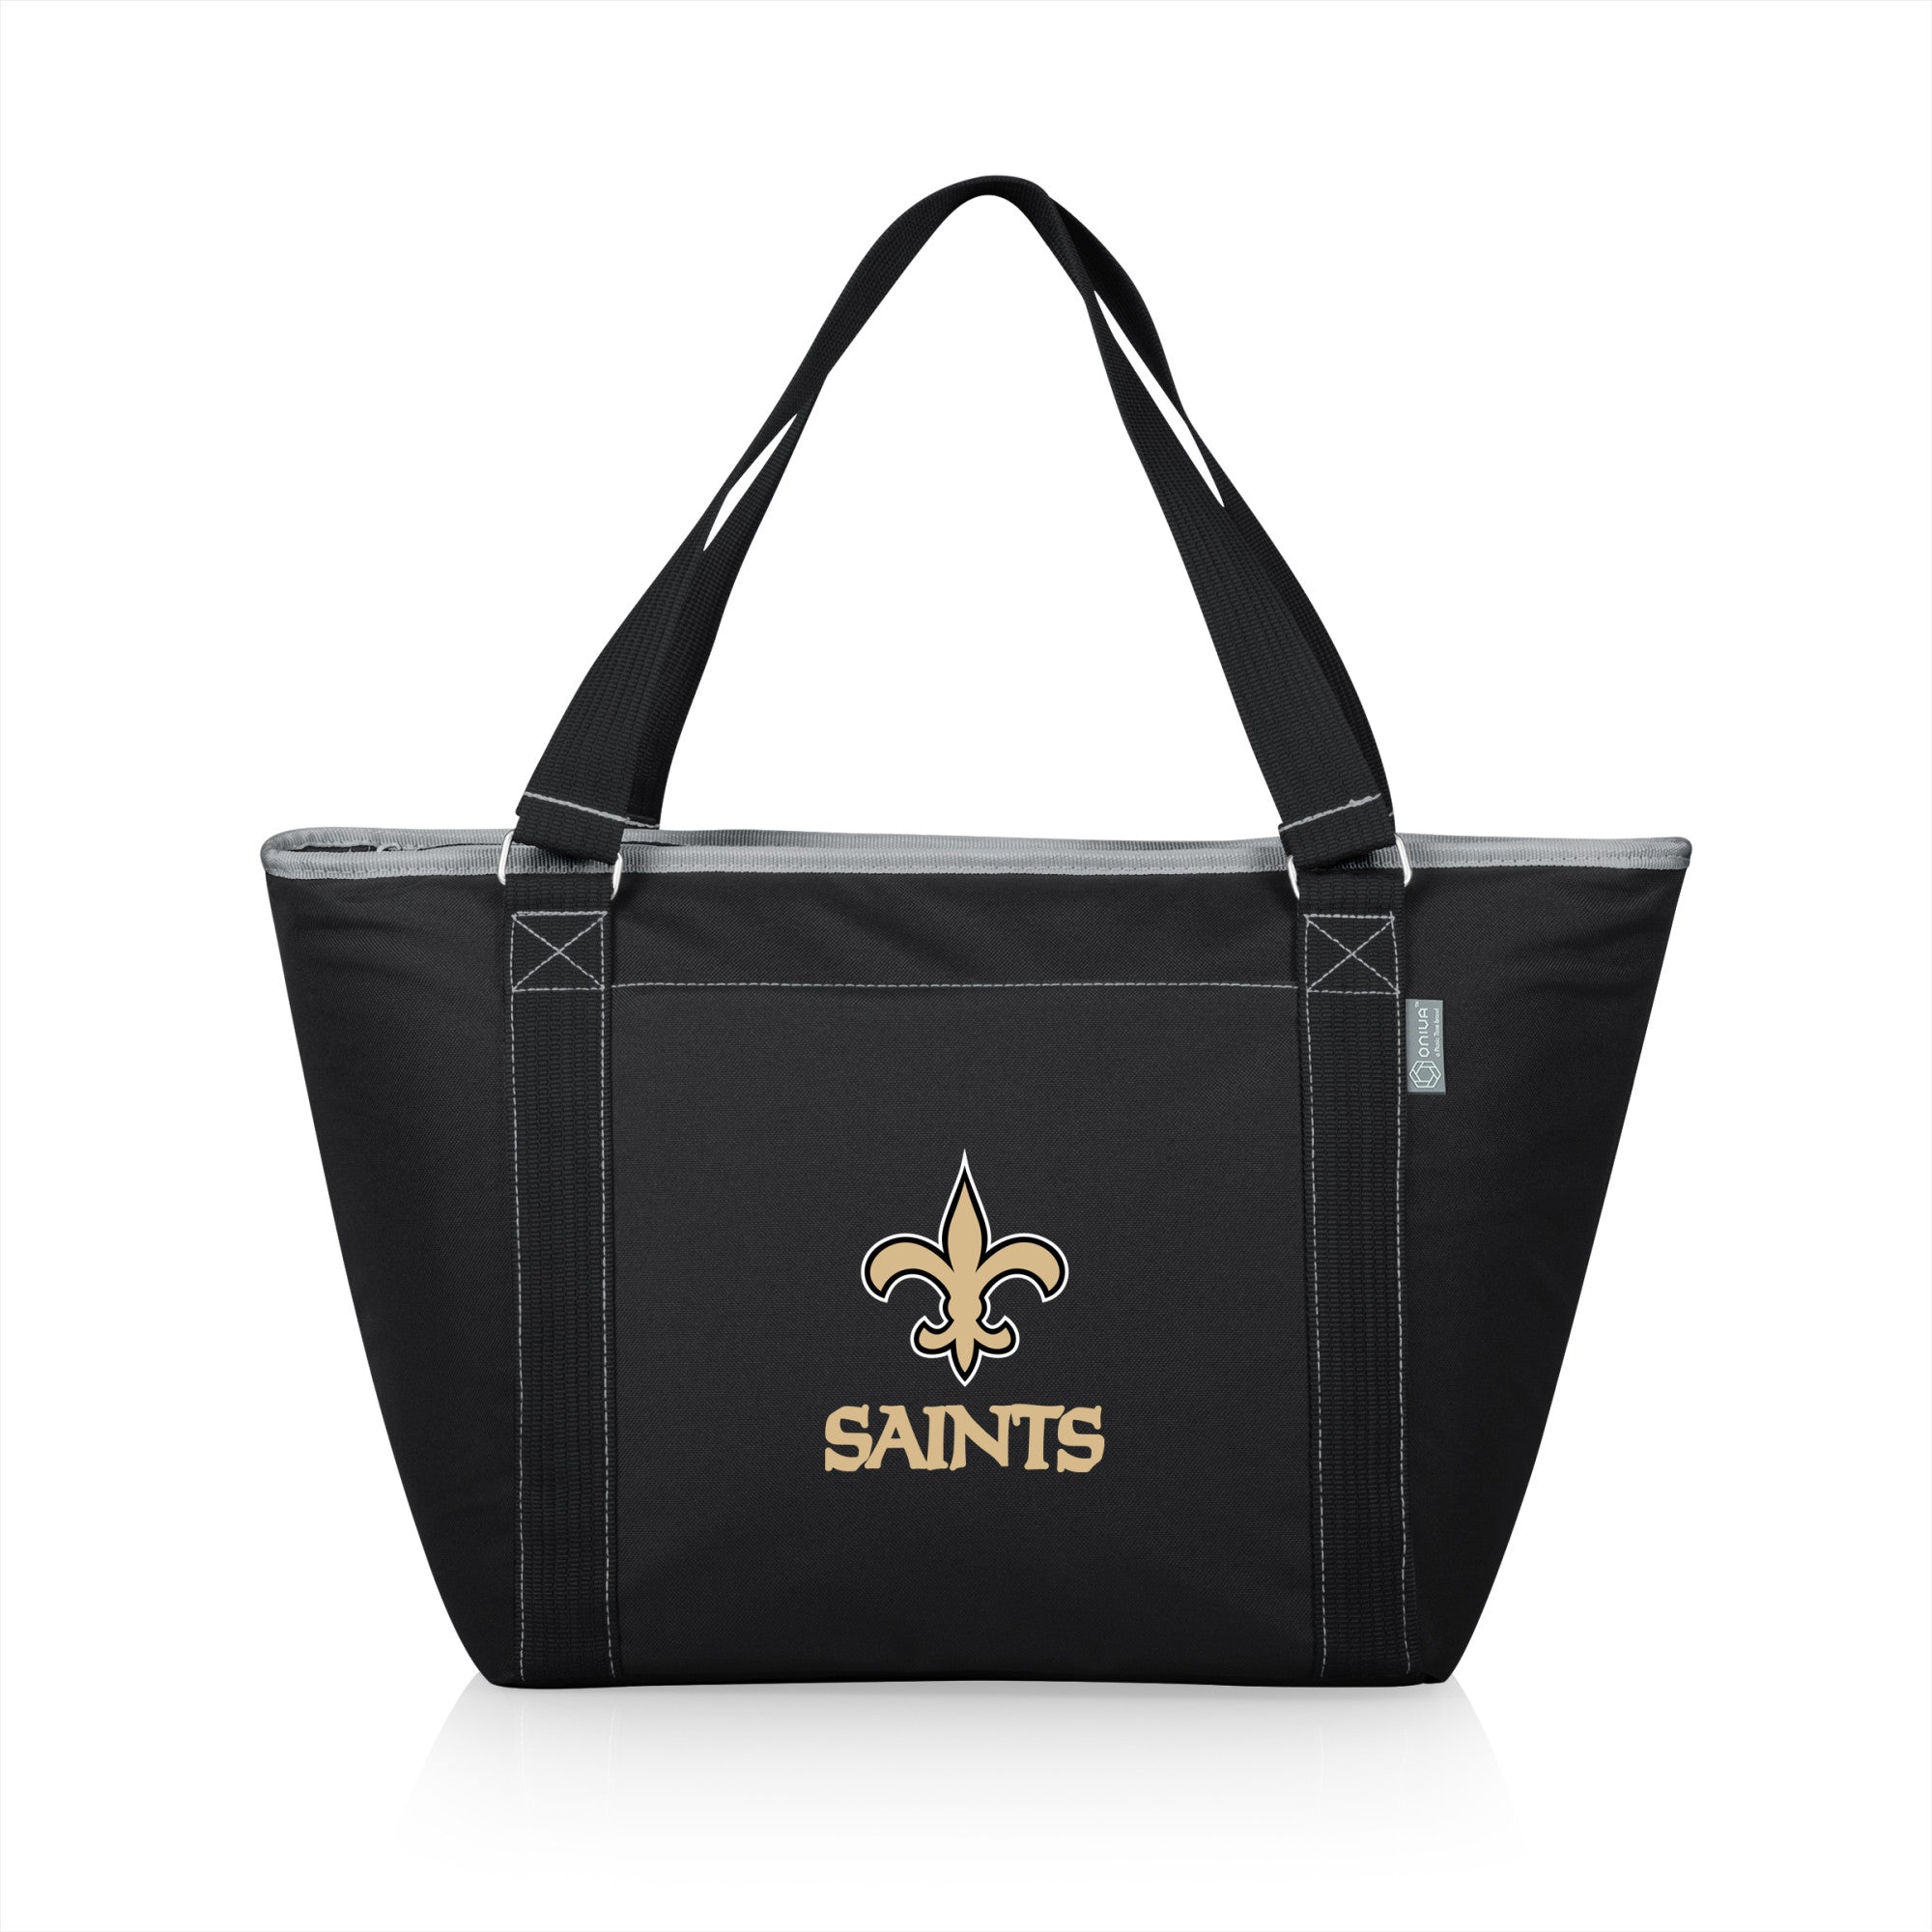 New Orleans Saints - Topanga Cooler Tote Bag, (Black)